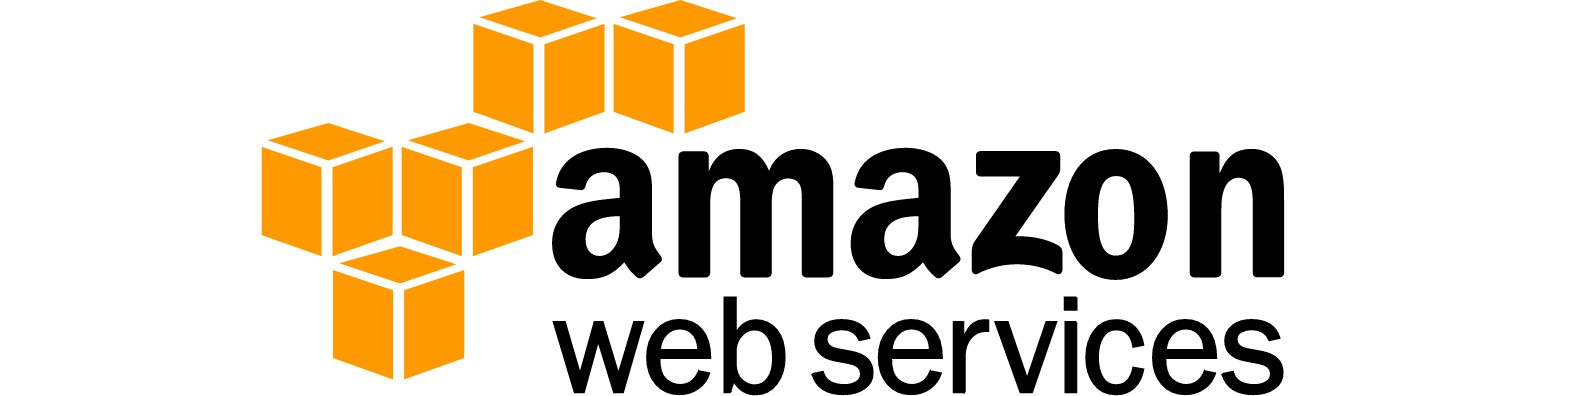 Amazon web services.